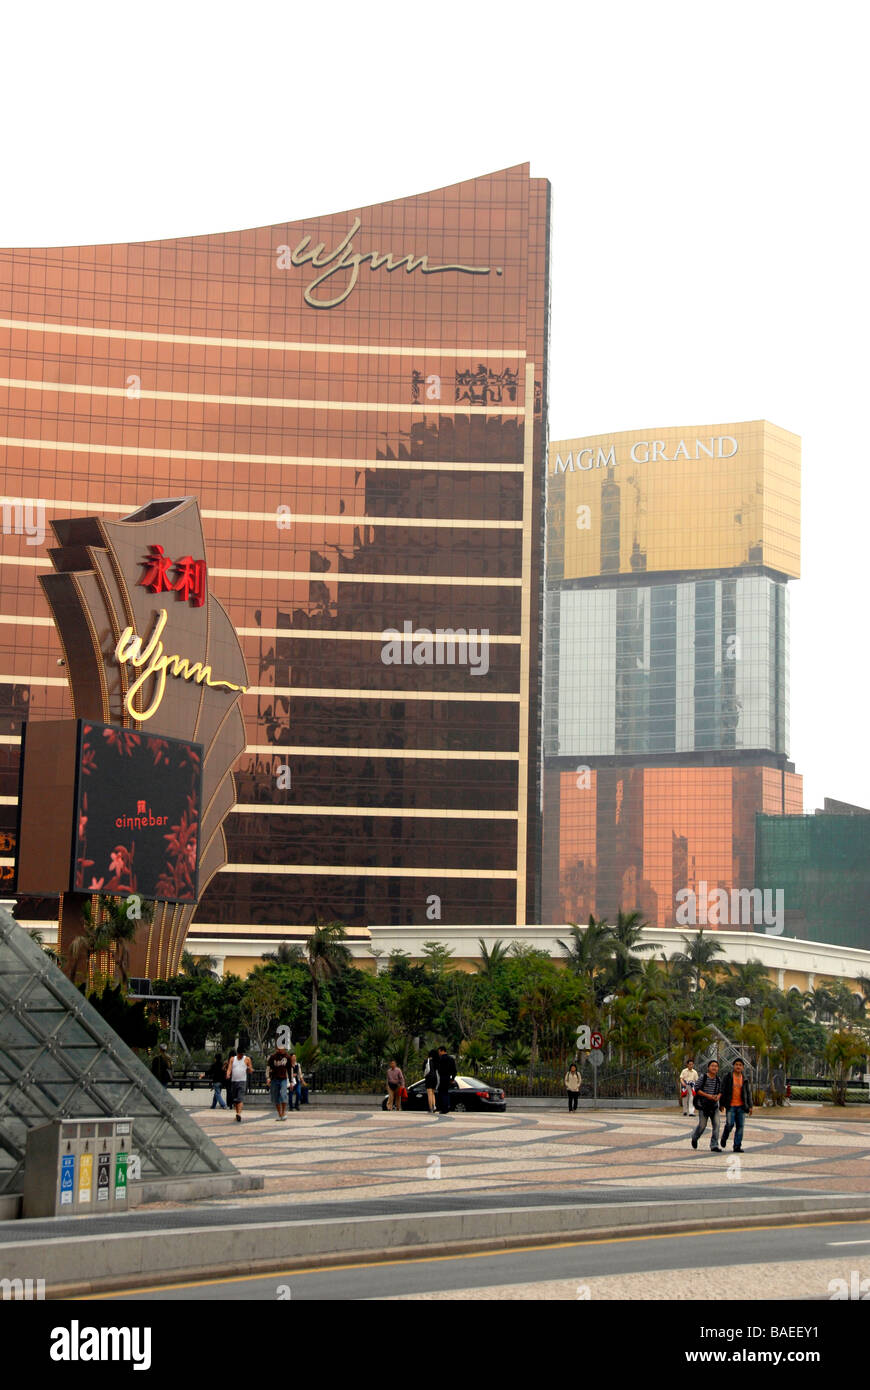 luxury hotels, Wynn and MGM grand,  Macau, China Stock Photo